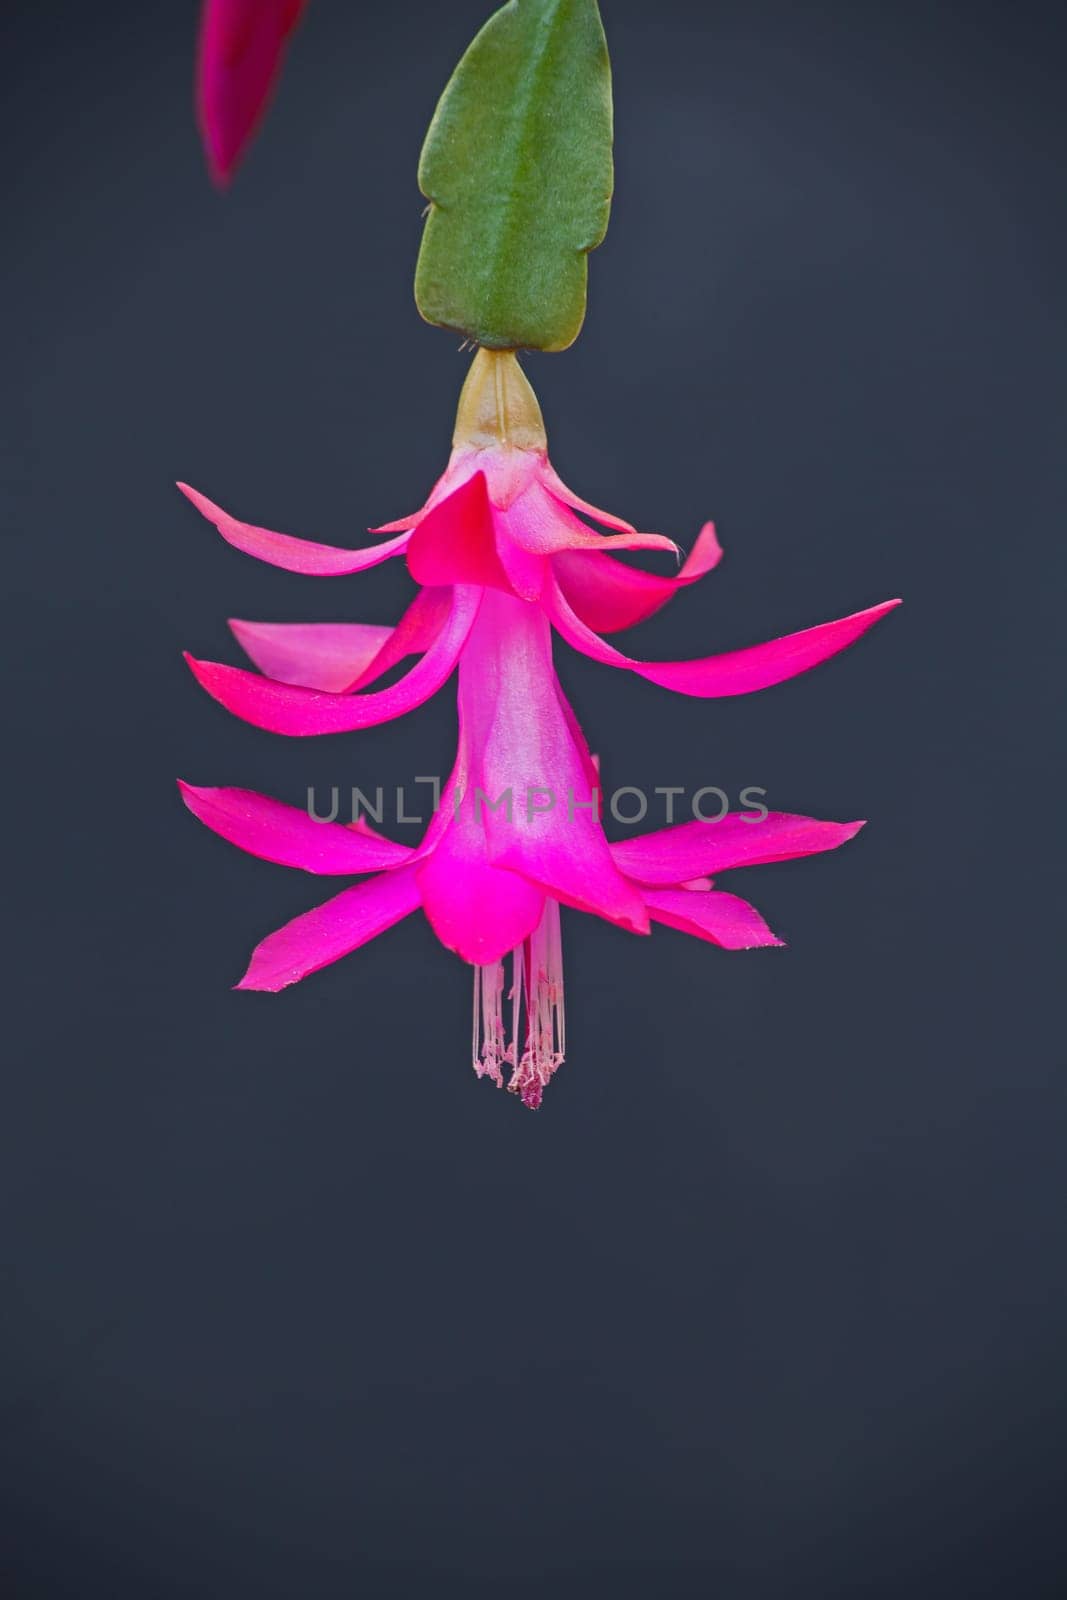 Macro image of a pink Schlumbergera flower